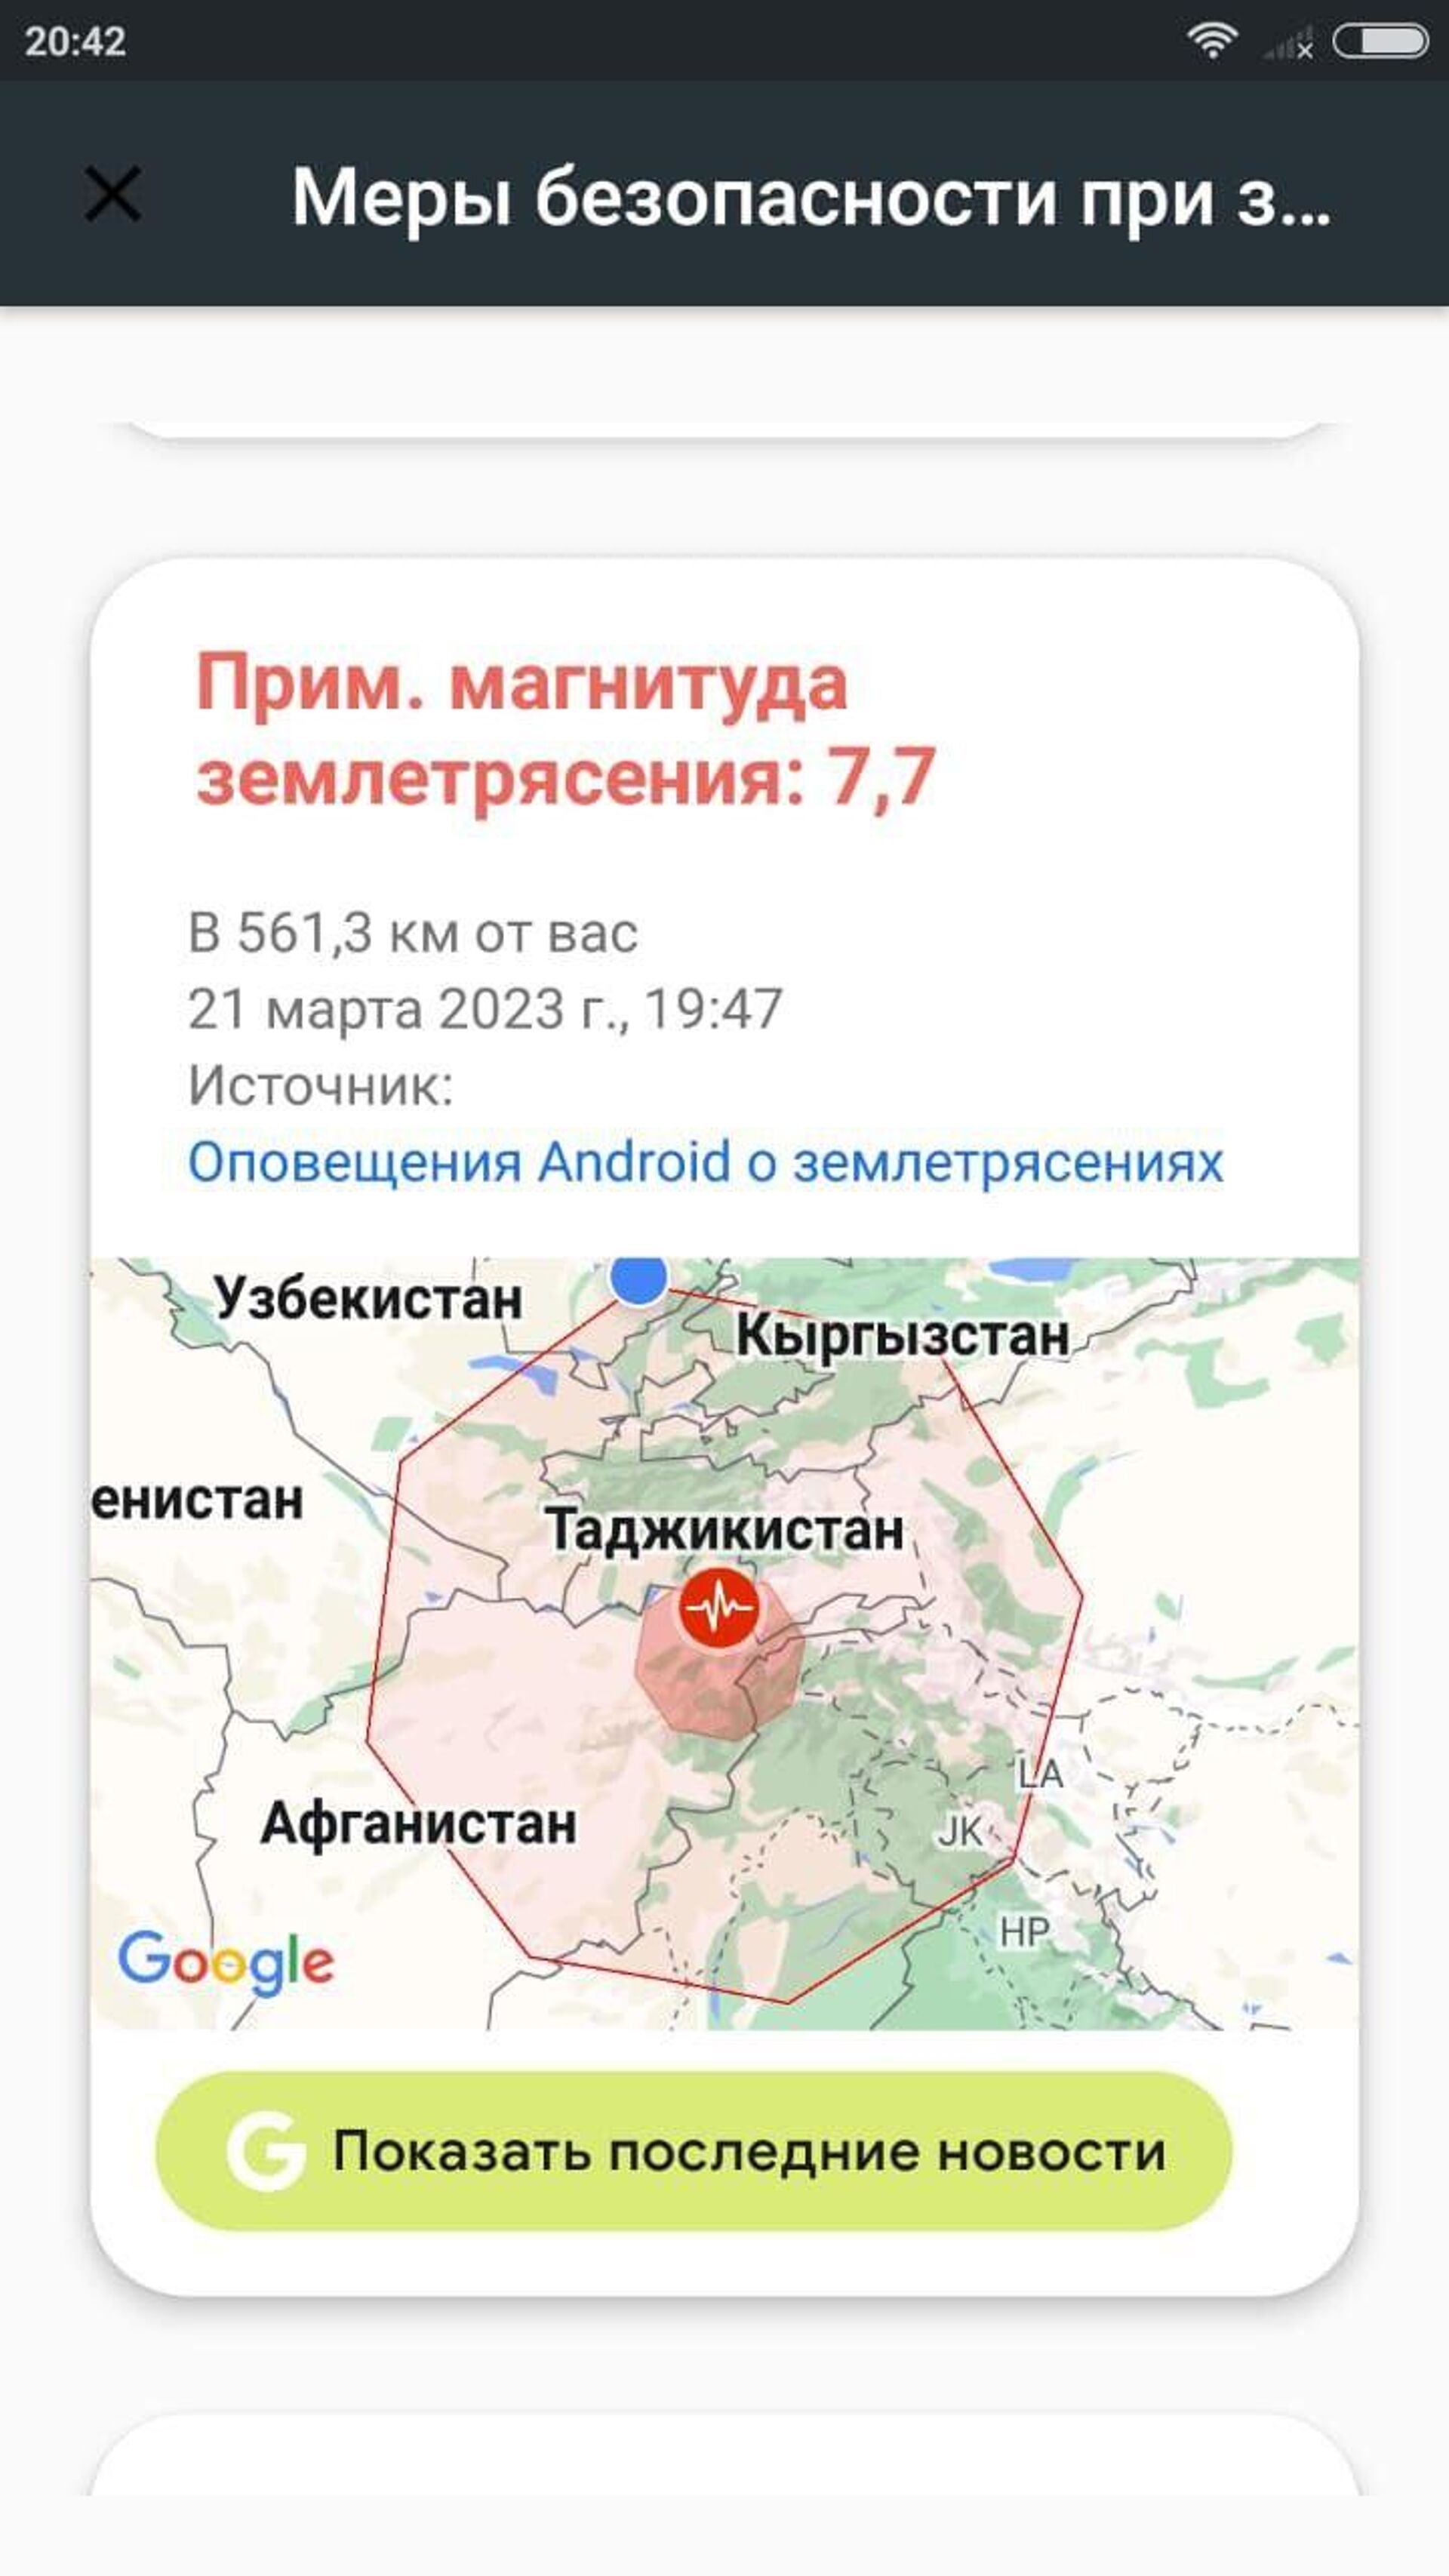 Оповещение о землетрясениях Google Earthquake - Sputnik Ўзбекистон, 1920, 24.03.2023